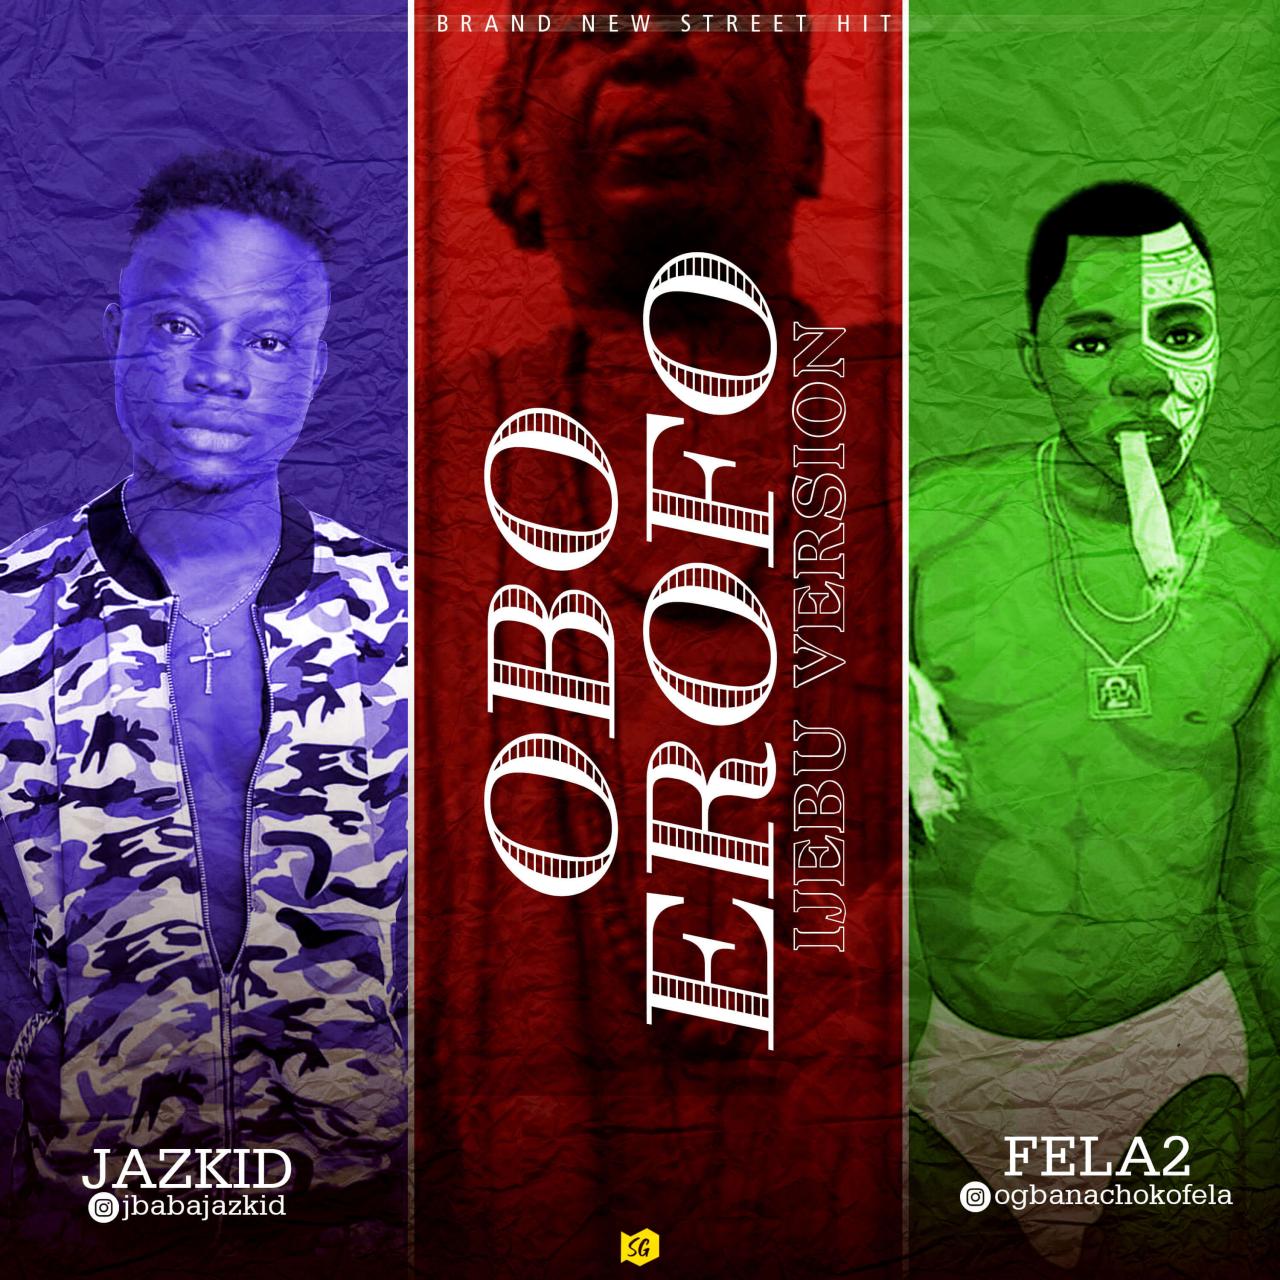 Fela 2 - Obo Erofo( Ijebu Version) Ft Jazkid 